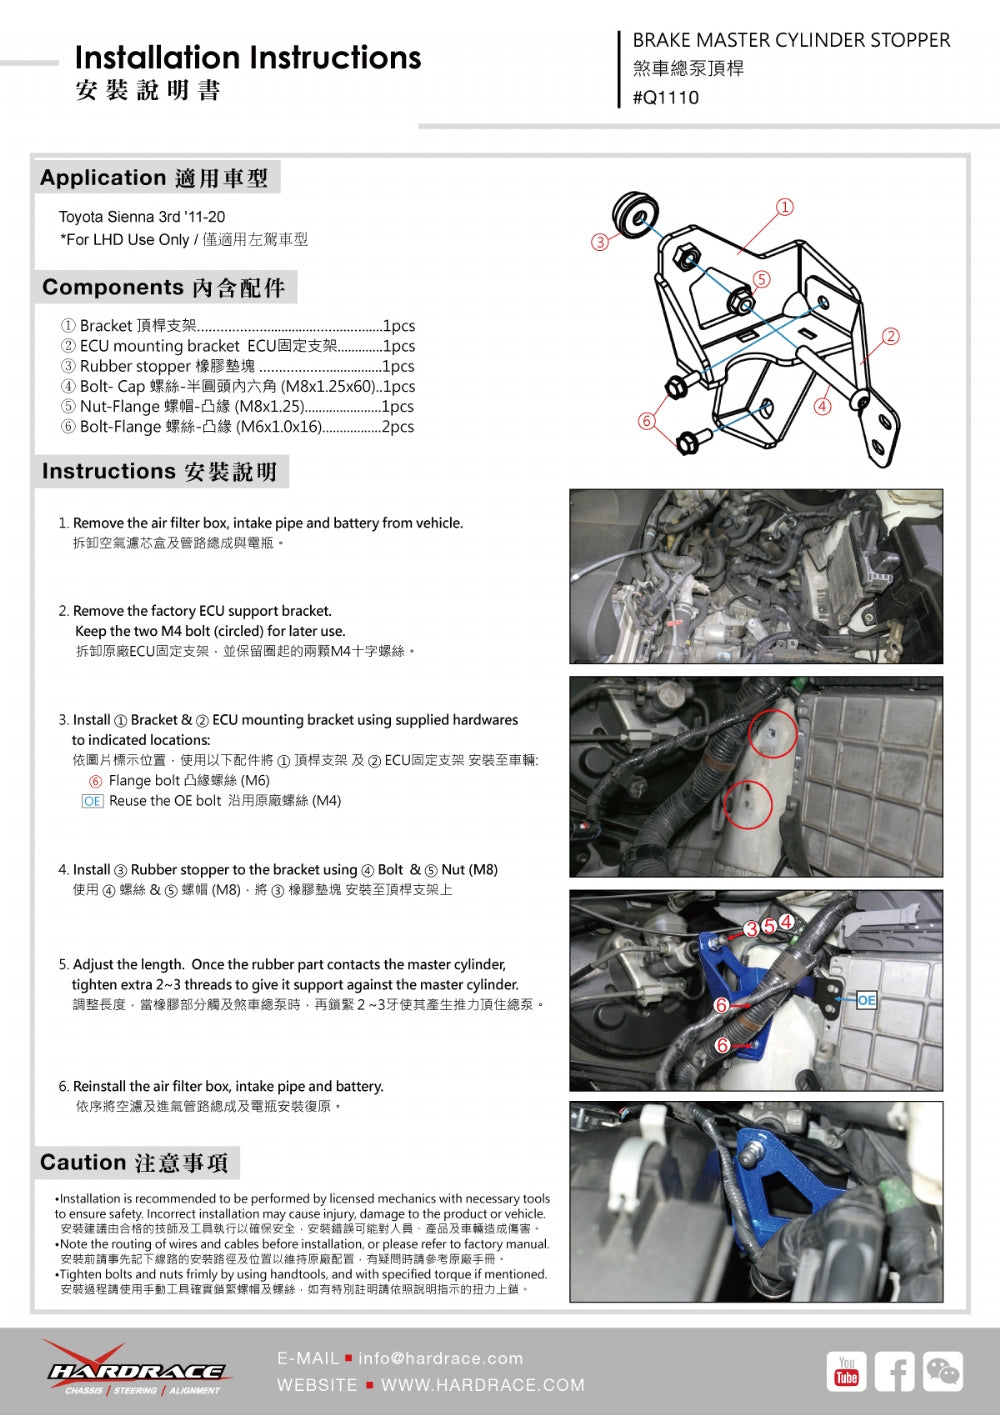 Brake Master Cylinder Stopper for Toyota Sienna 3rd XL30 2011-2020